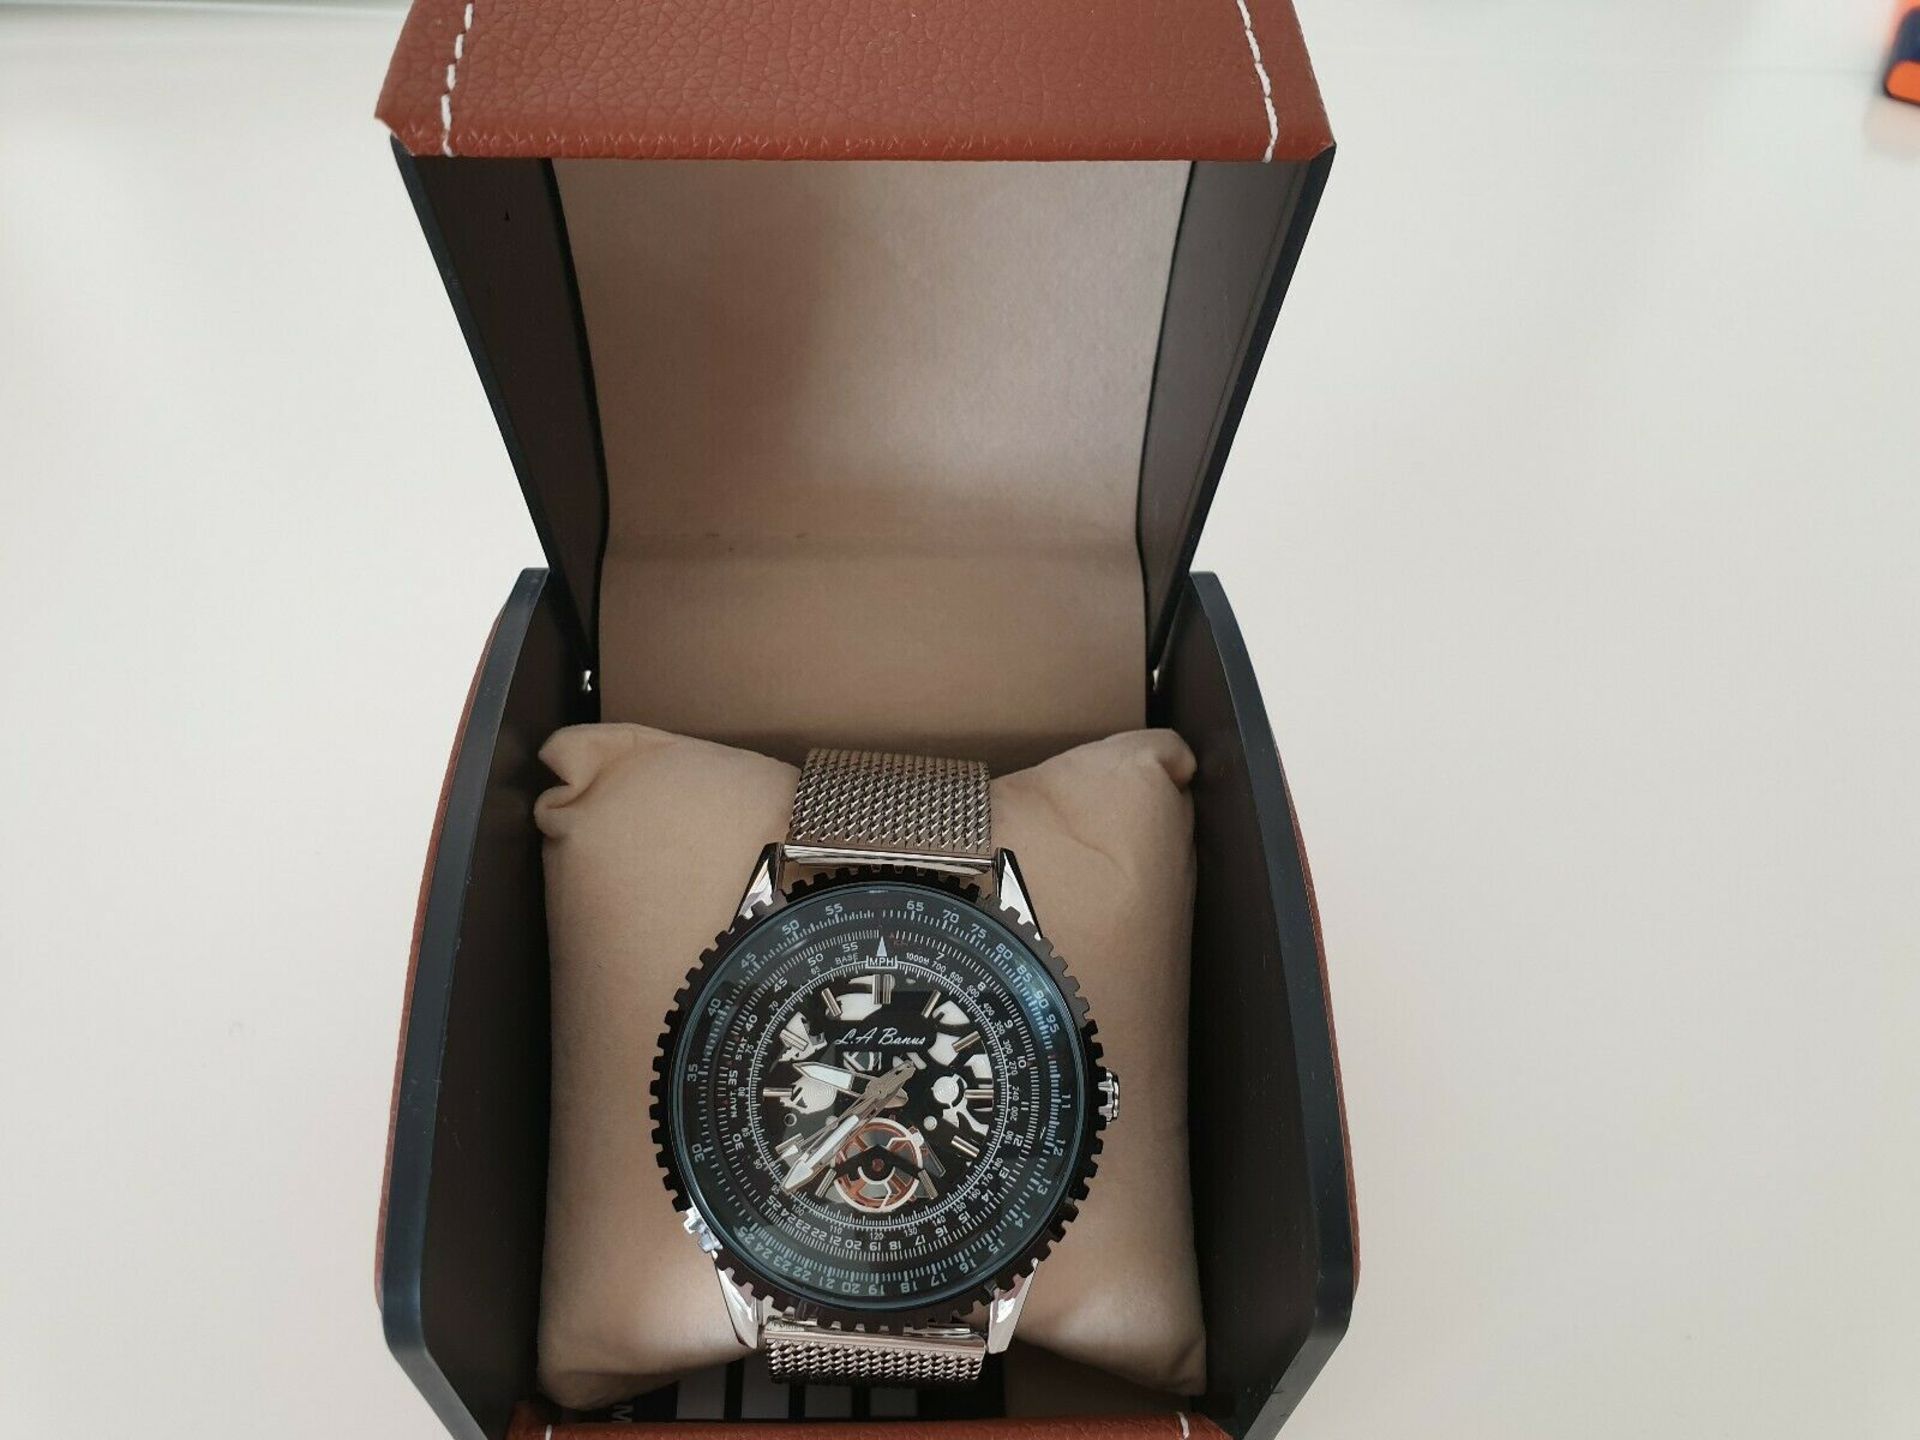 La Banus Men's Skeleton Dial Watch In Silver And Black Rrp £599 - Image 3 of 4